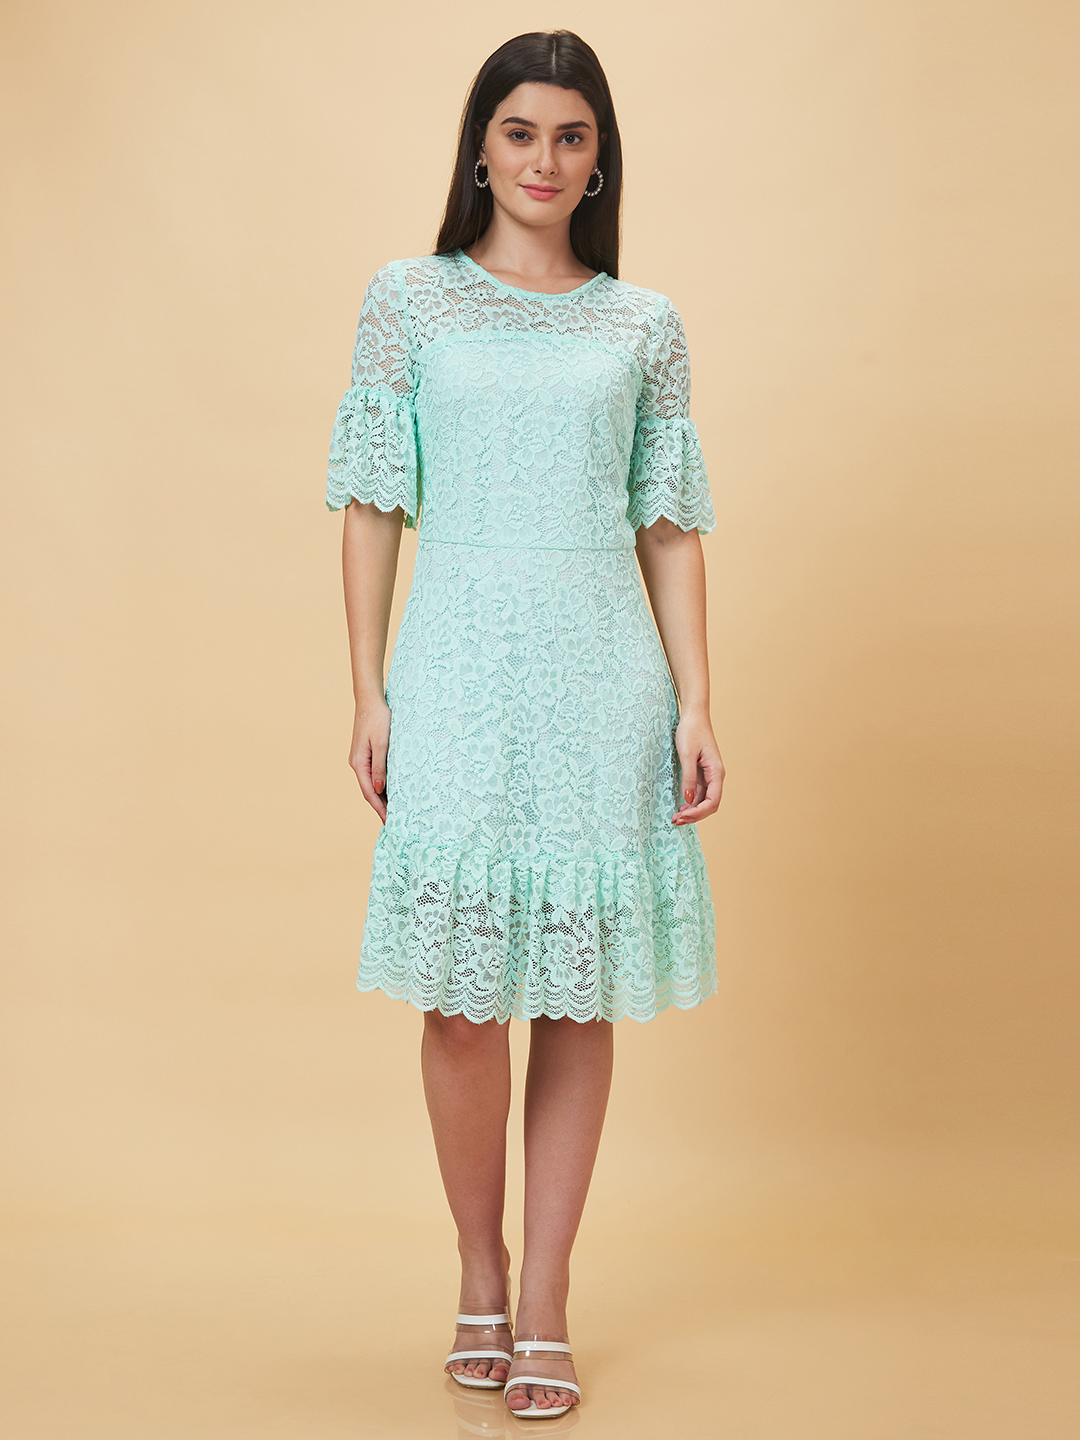 Globus Women Mint Green Floral Lace Design Flared Hem A-Line Dress